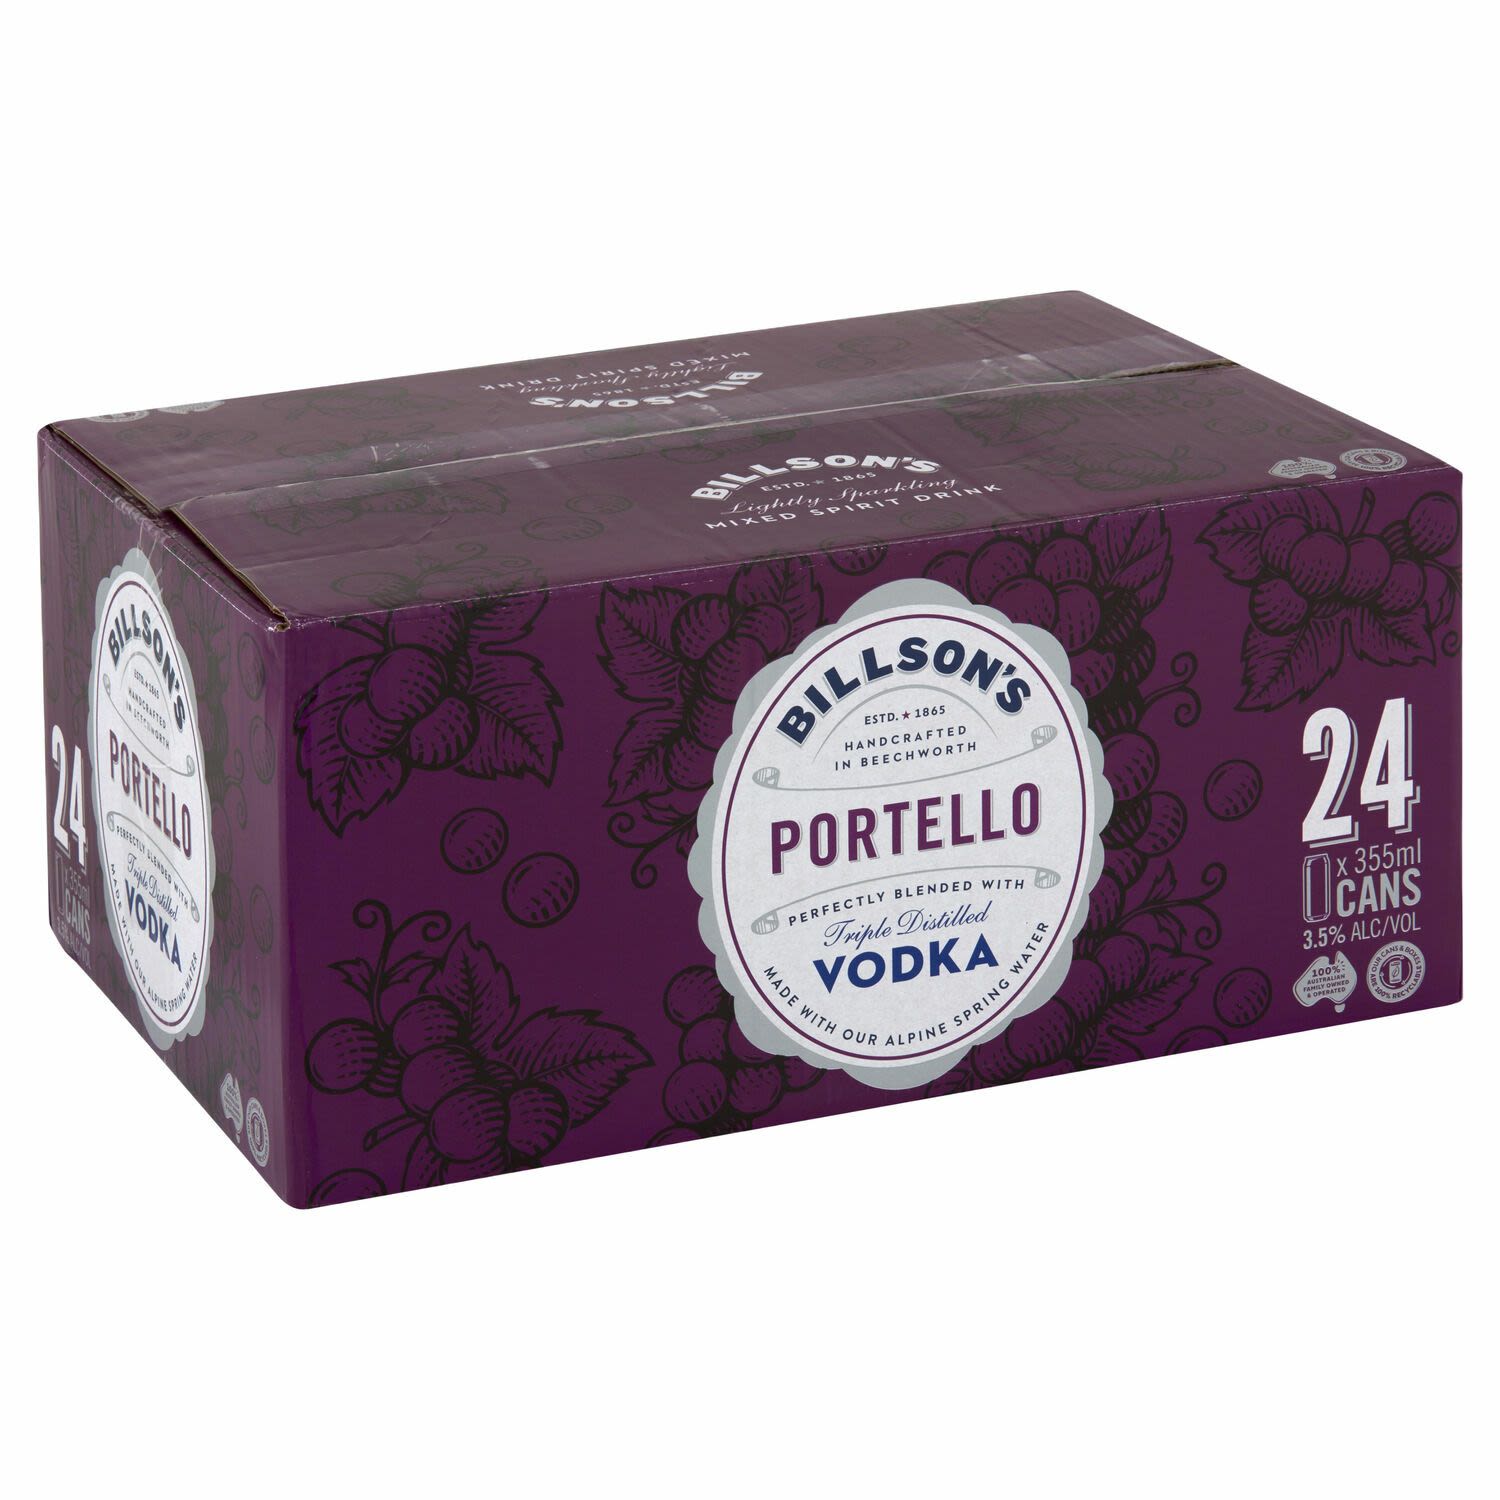 Billson's Vodka with Portello Can 355mL 24 Pack